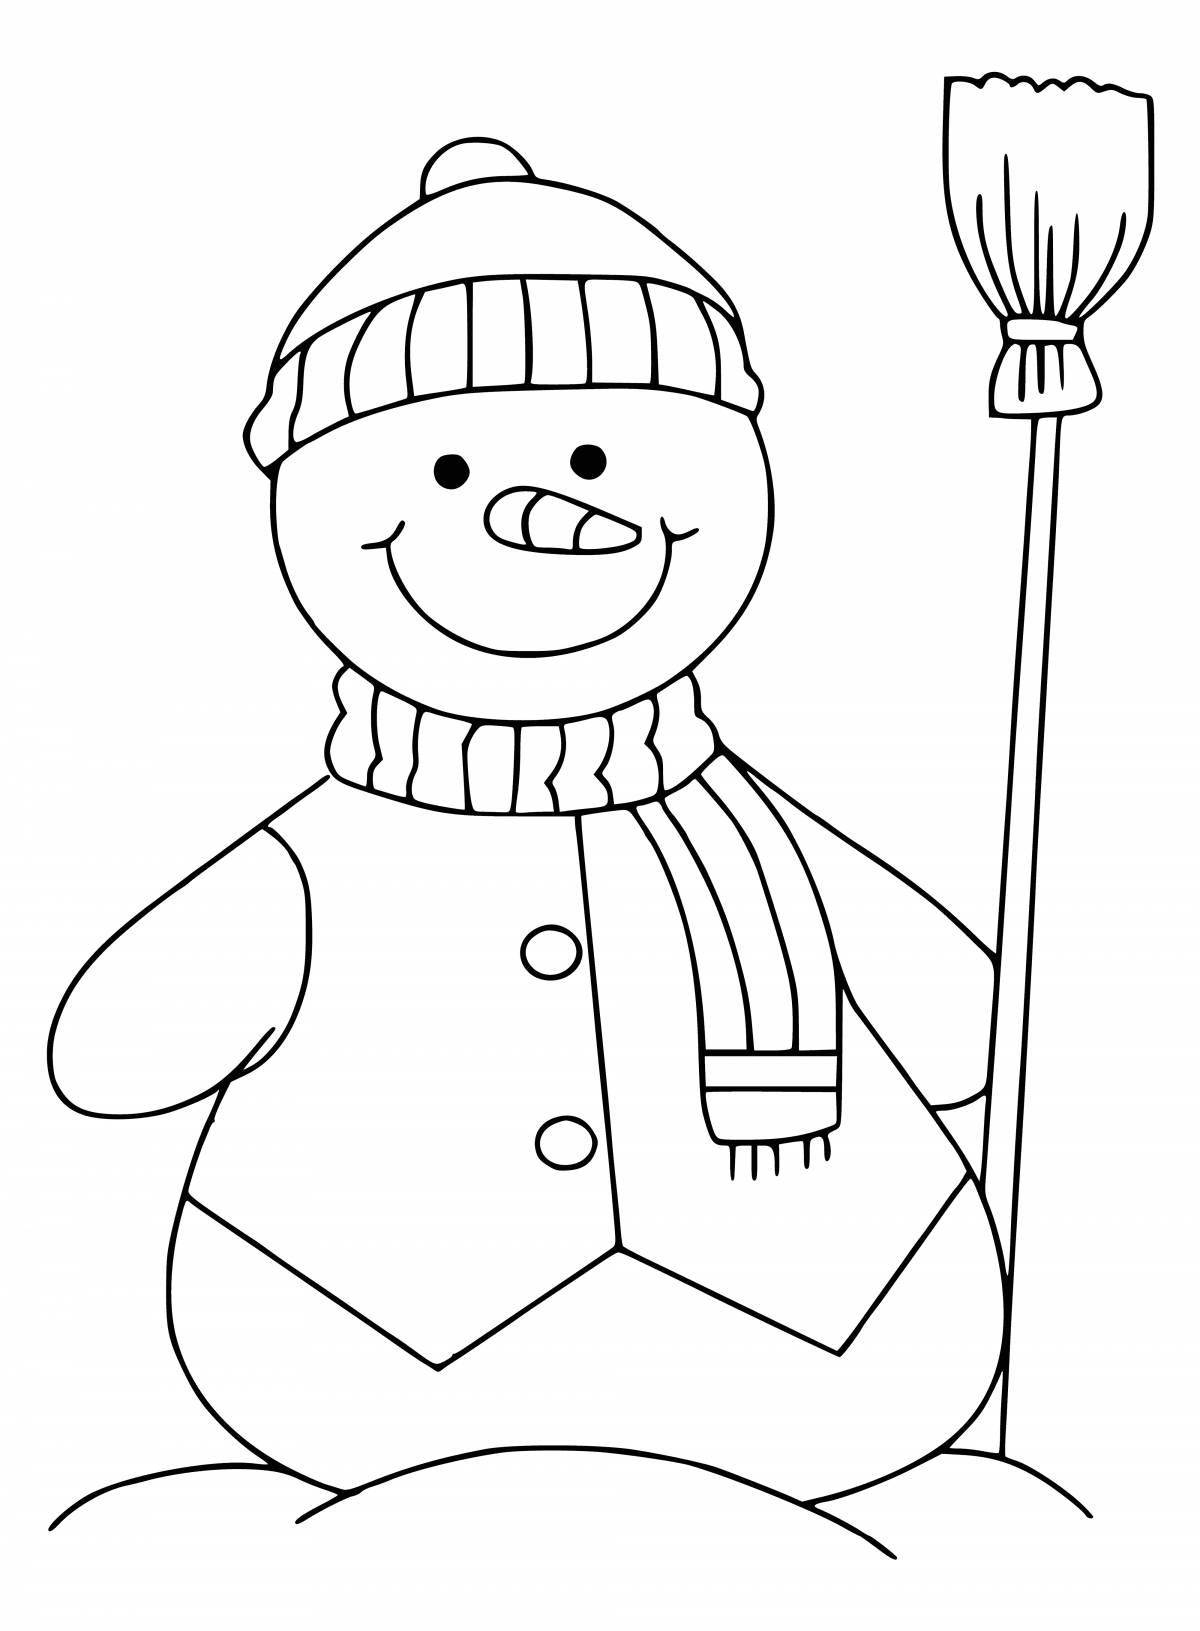 Snowman #11